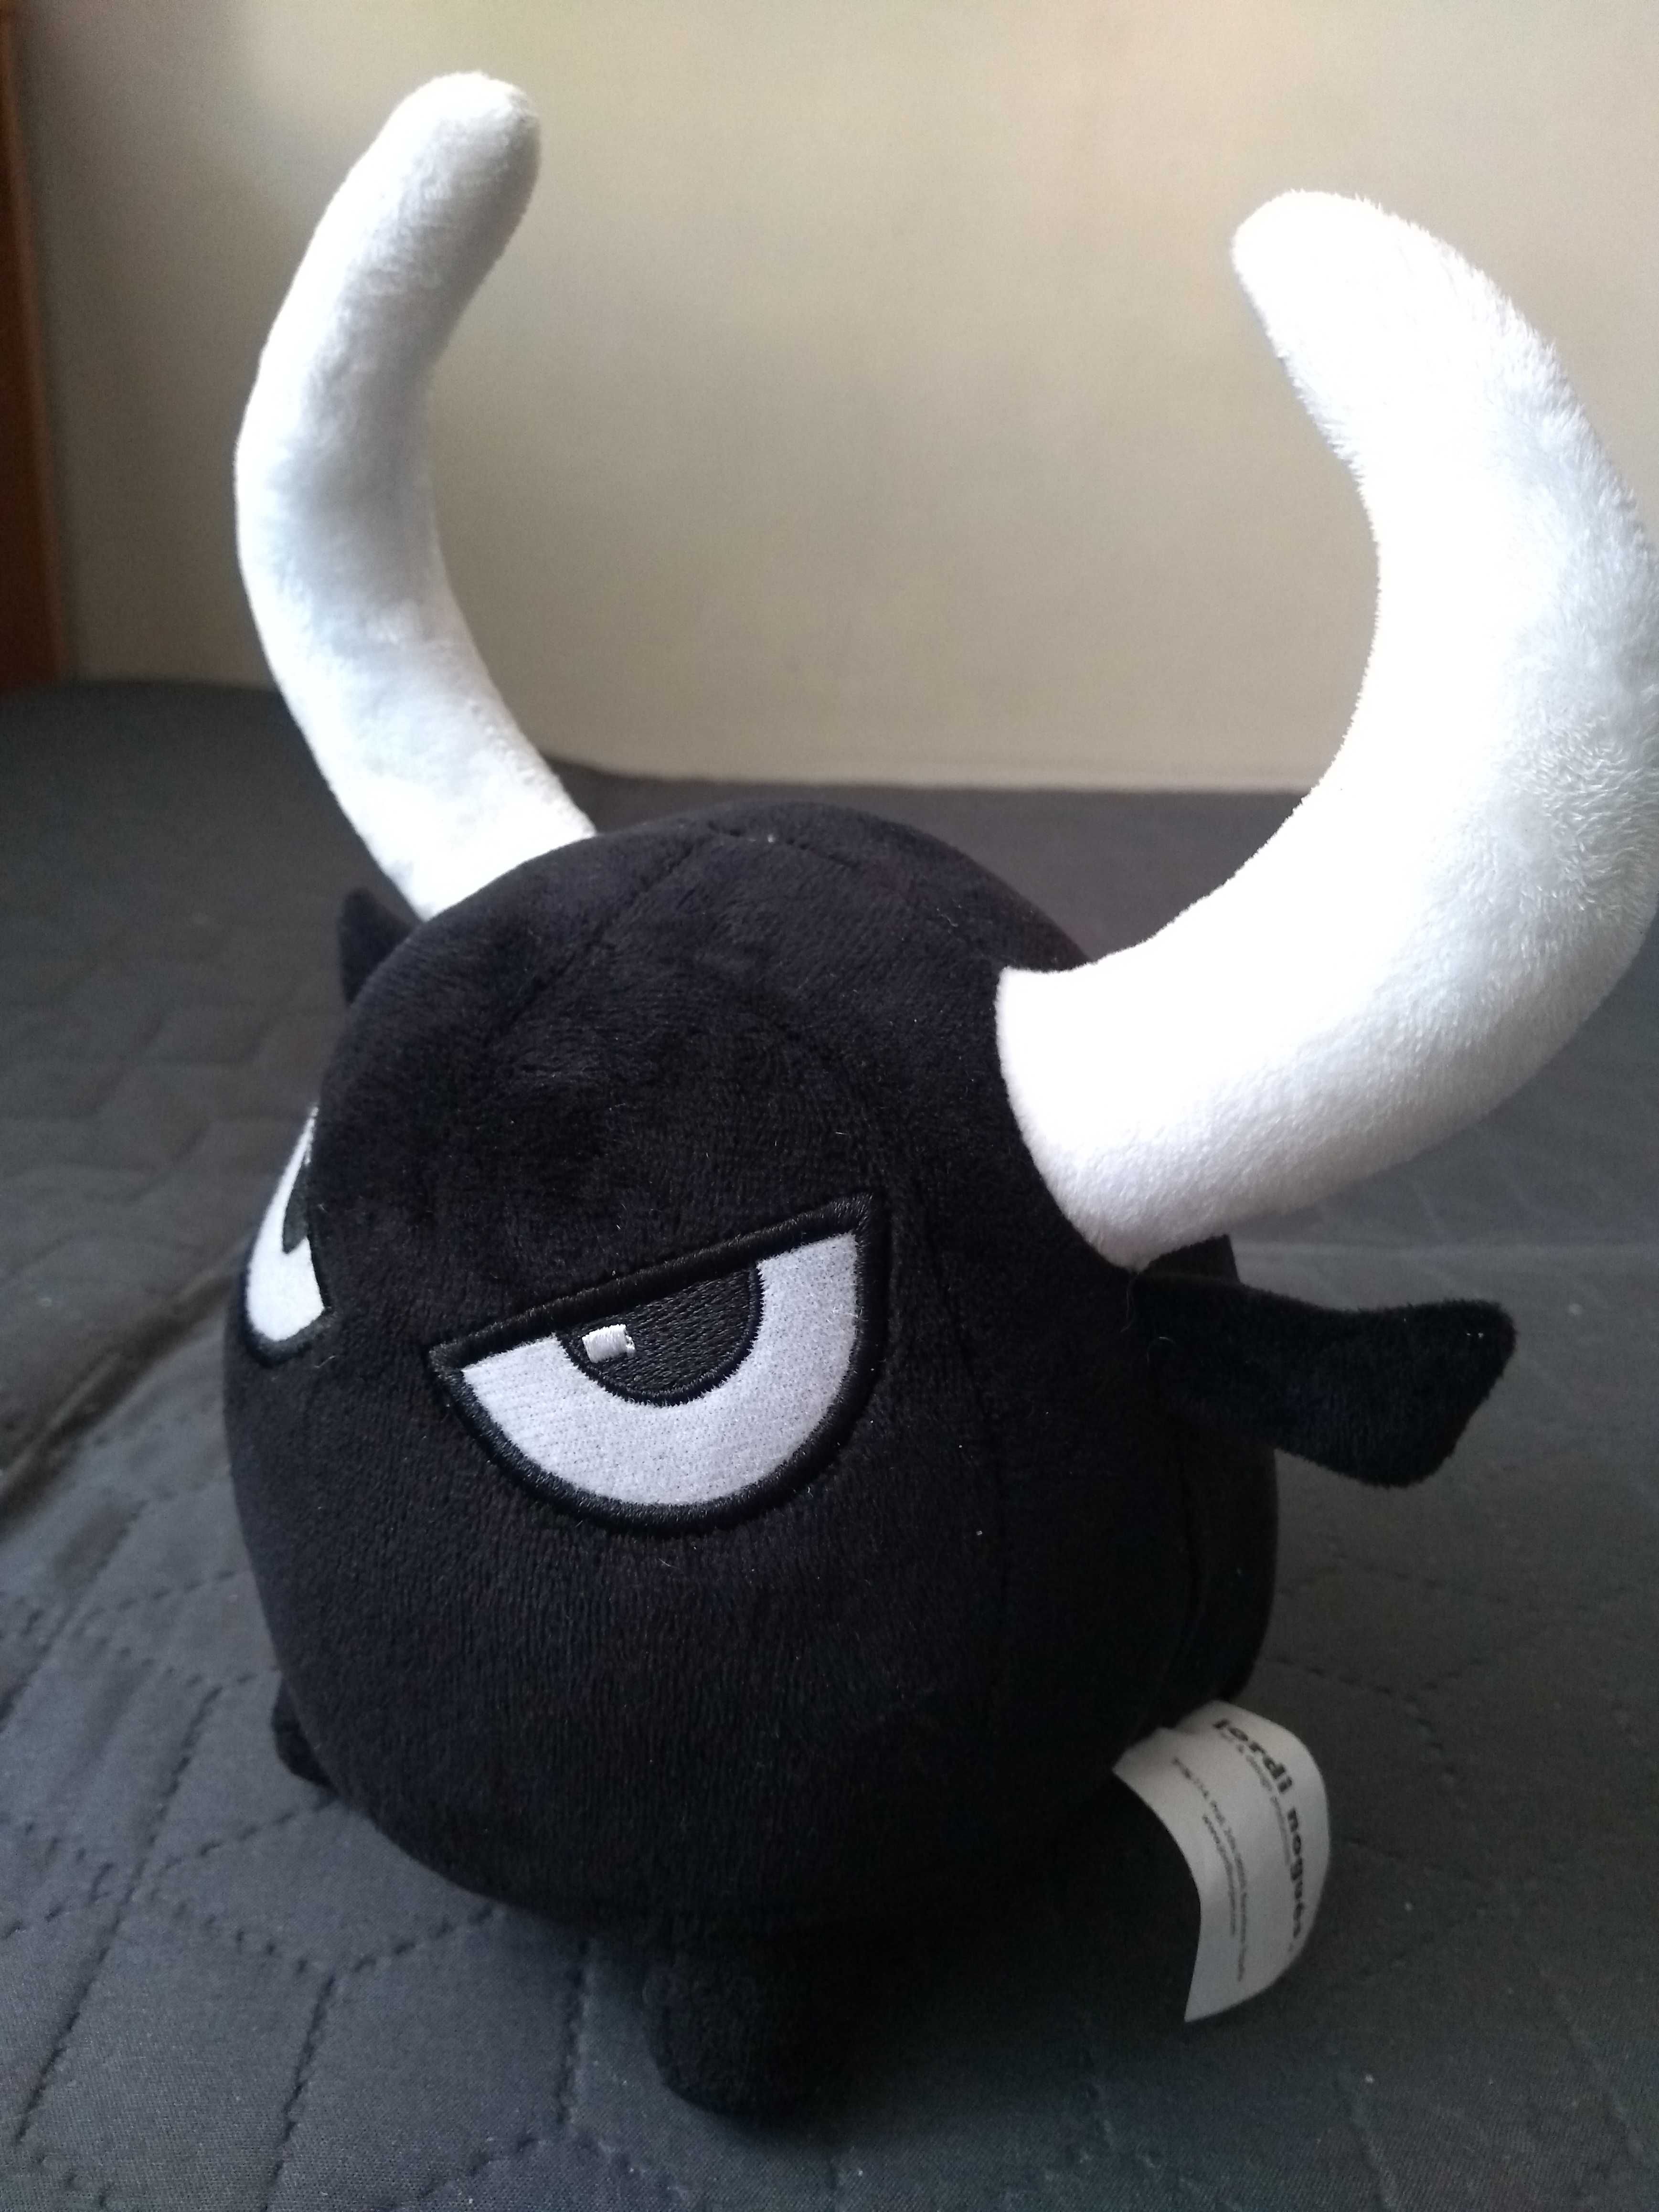 Maskotka pluszowa Bad Toro Black Bull Byk Jordi Nogues 21 cm